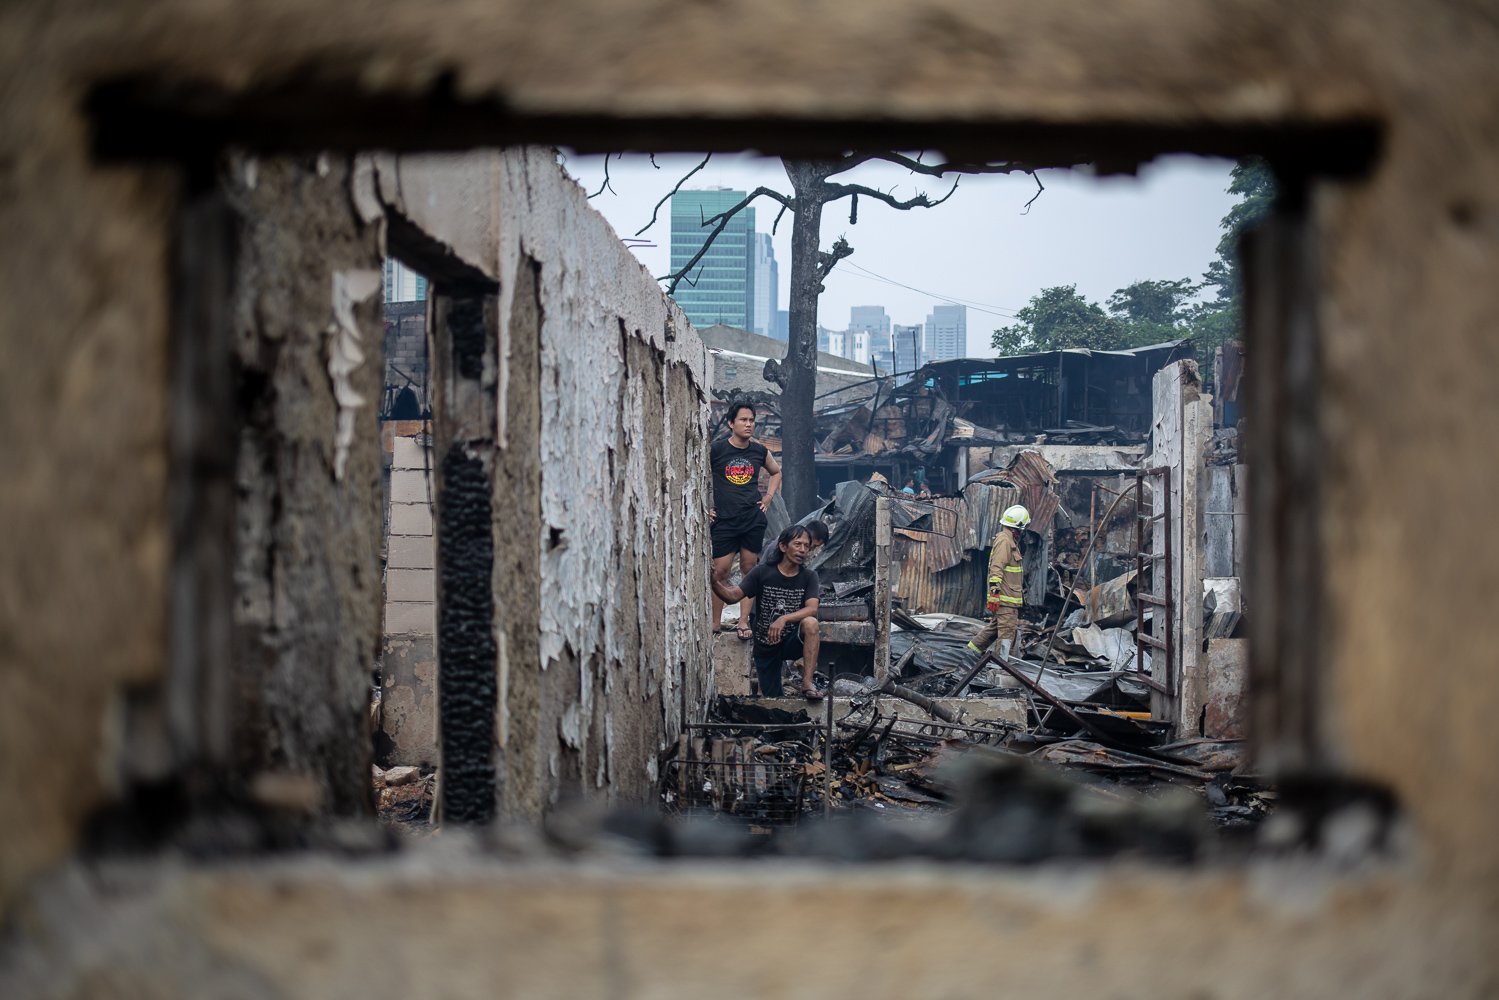 Suku Dinas Penanggulangan Kebakaran dan Penyelamatan (Gulkarmat) dan warga mengamati sejumlah rumah di pemukiman padat penduduk yang hangus dilahap si jago merah di Jalan Simprug Golf II, Kecamatan Kebayoran Lama, Jakarta, Minggu (21/8). Akibat peristiwa tersebut 1 orang meninggal dunia diduga akibat kaget dan kelelahan. Selain itu, sebanyak 383 jiwa dari 164 KK harus mengungsi di tenda darurat.